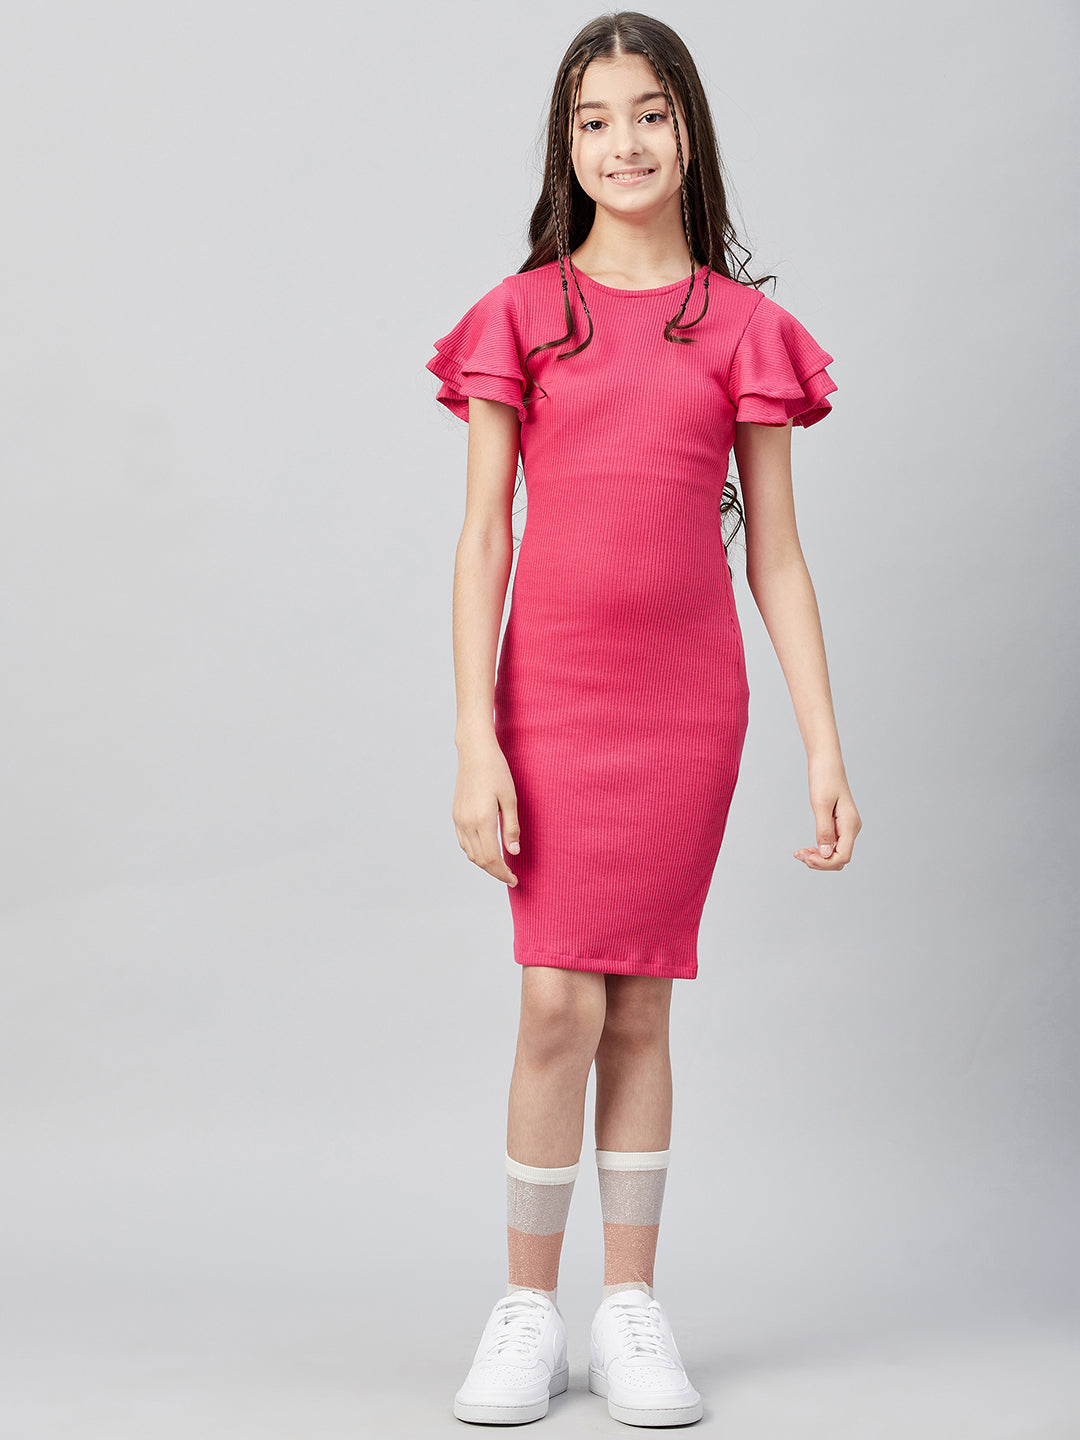 Athena Girl Pink Sheath Dress - Athena Lifestyle